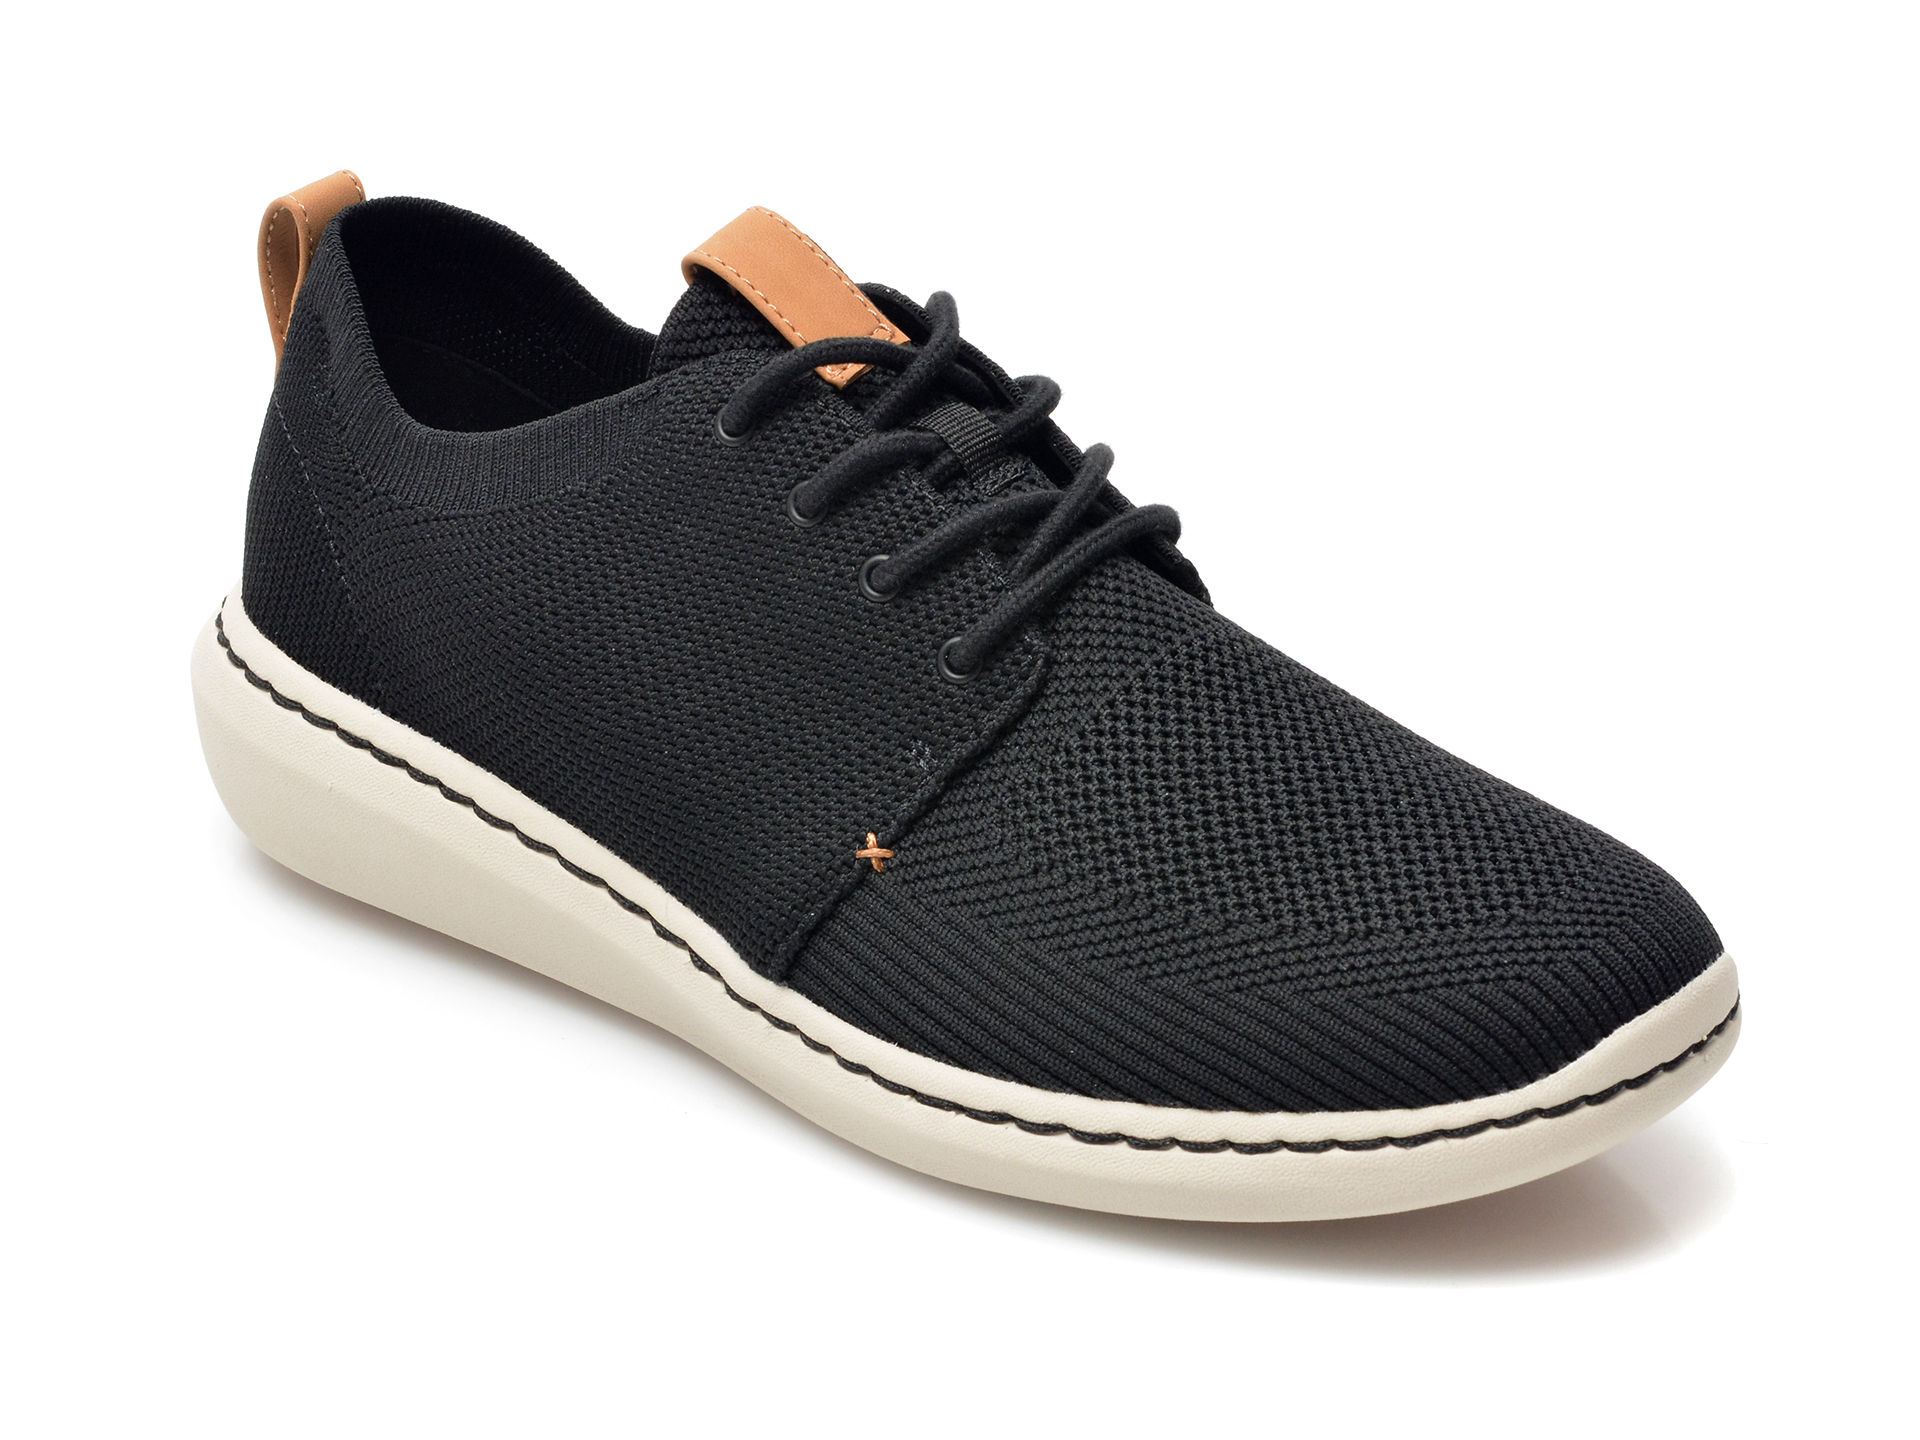 Pantofi sport CLARKS negri, STEP URBAN MIX, din material textil Clarks